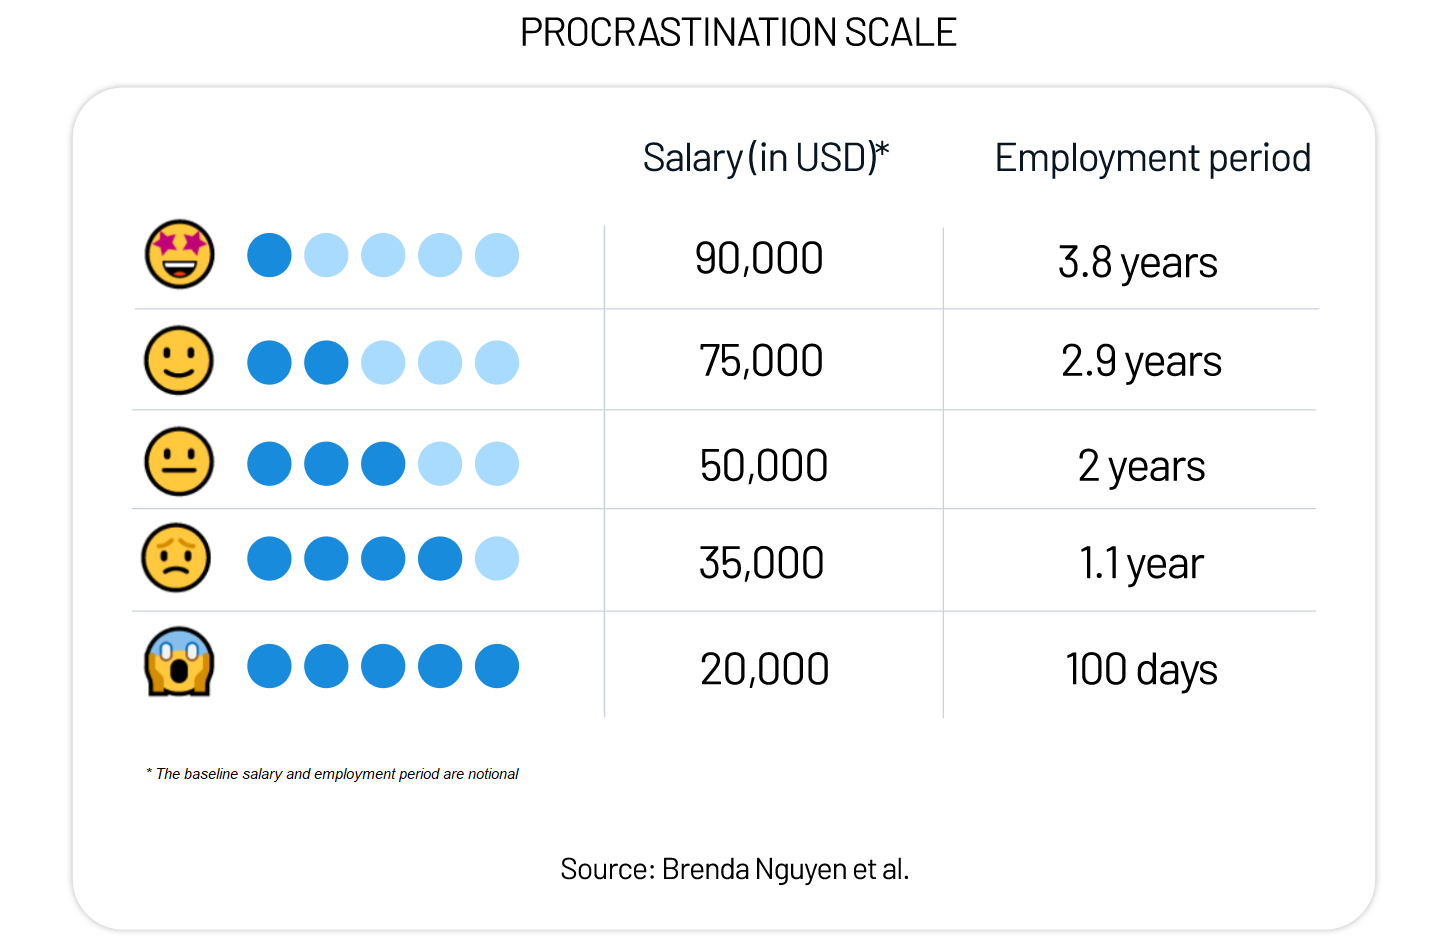 Procrastination scale